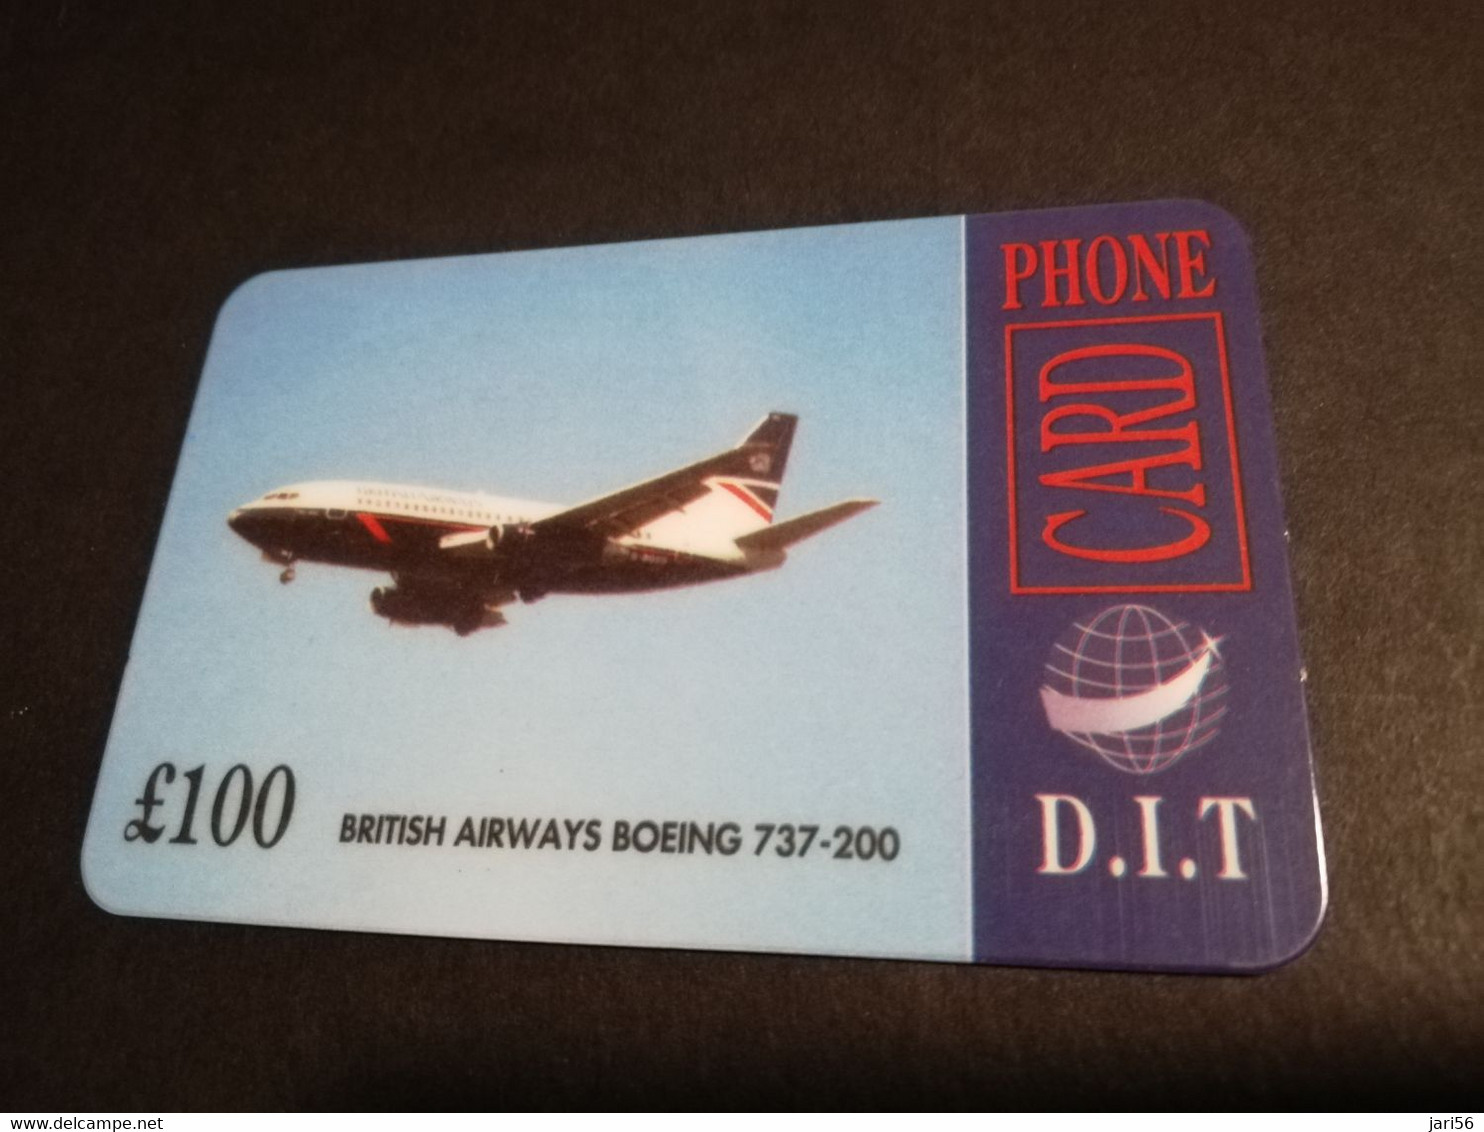 GREAT BRITAIN   100 POUND  AIR PLANES    DIT PHONECARD    PREPAID CARD      **5912** - [10] Colecciones